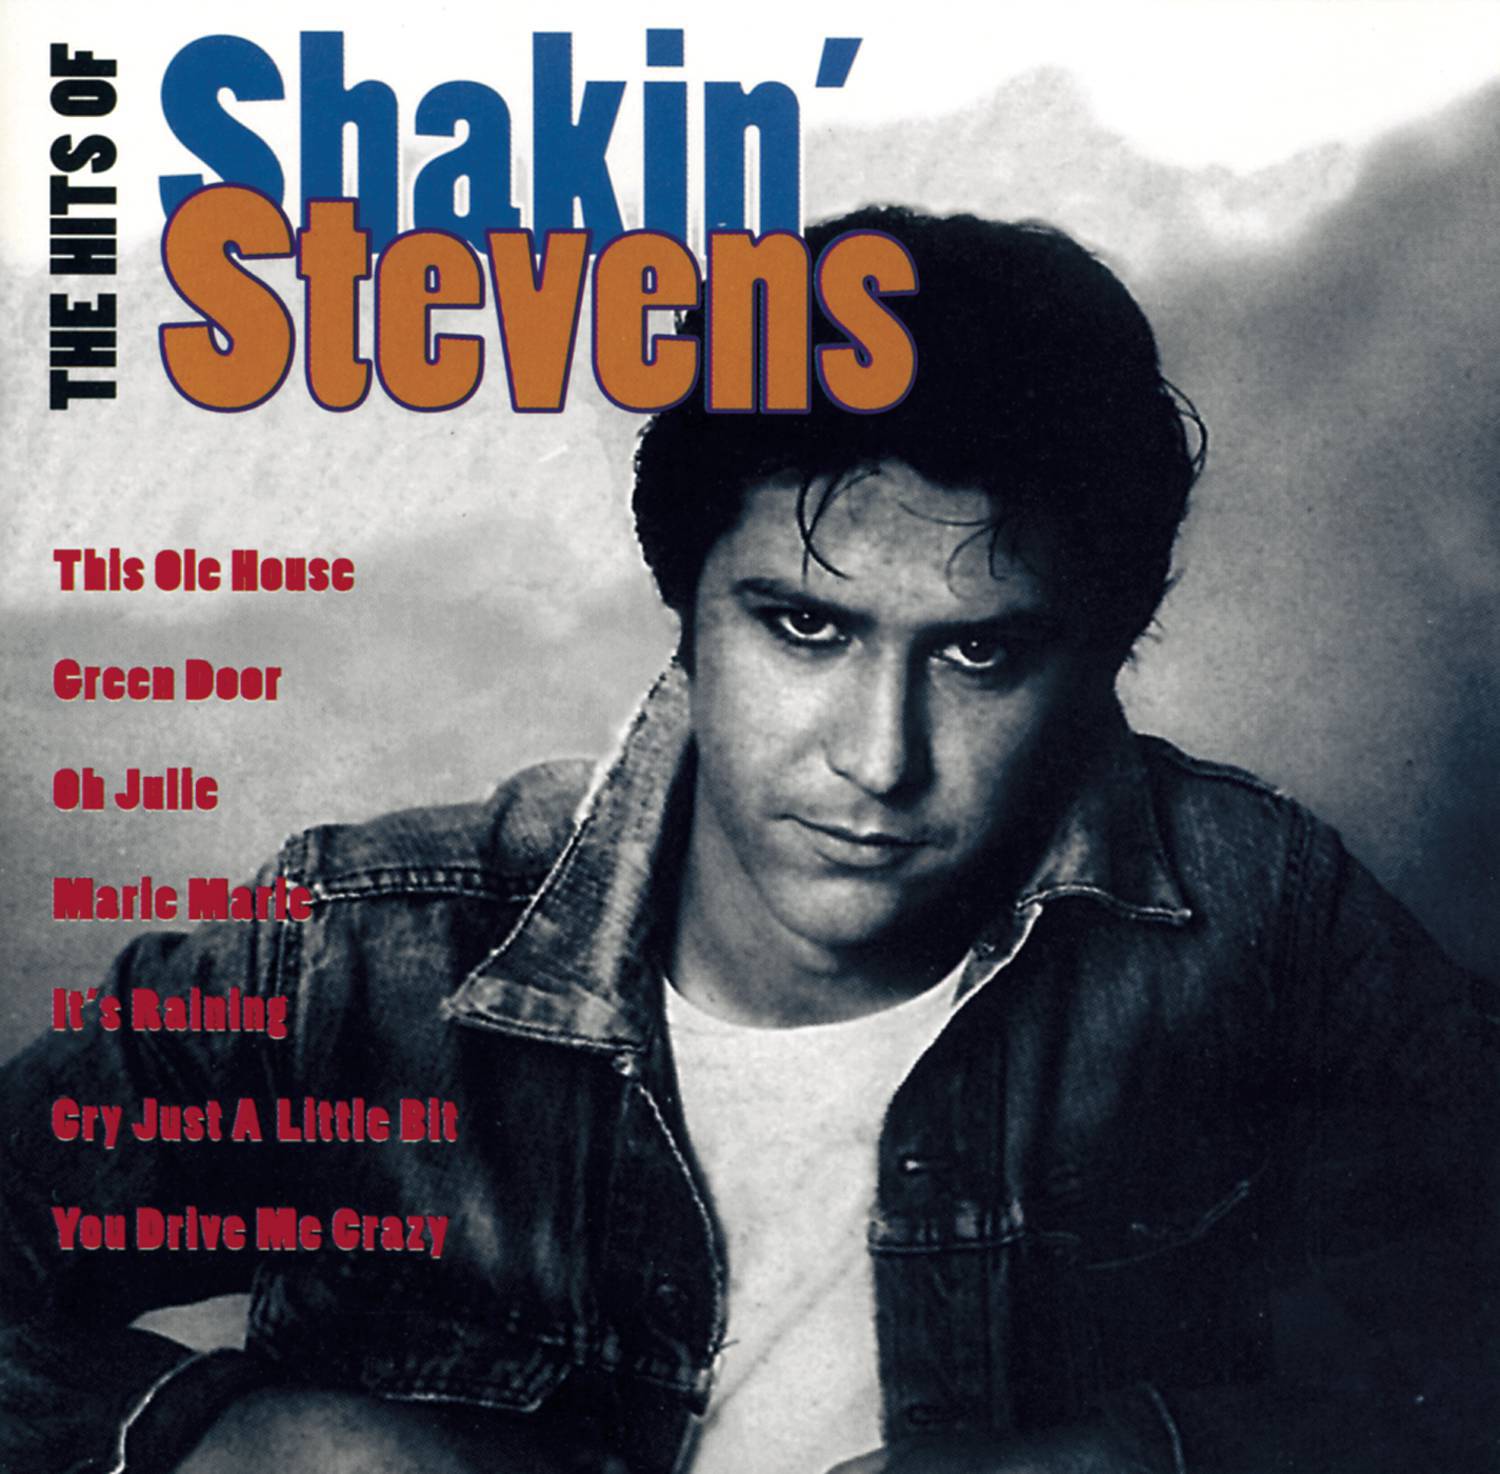 The Hits Of Shakin' Stevens专辑